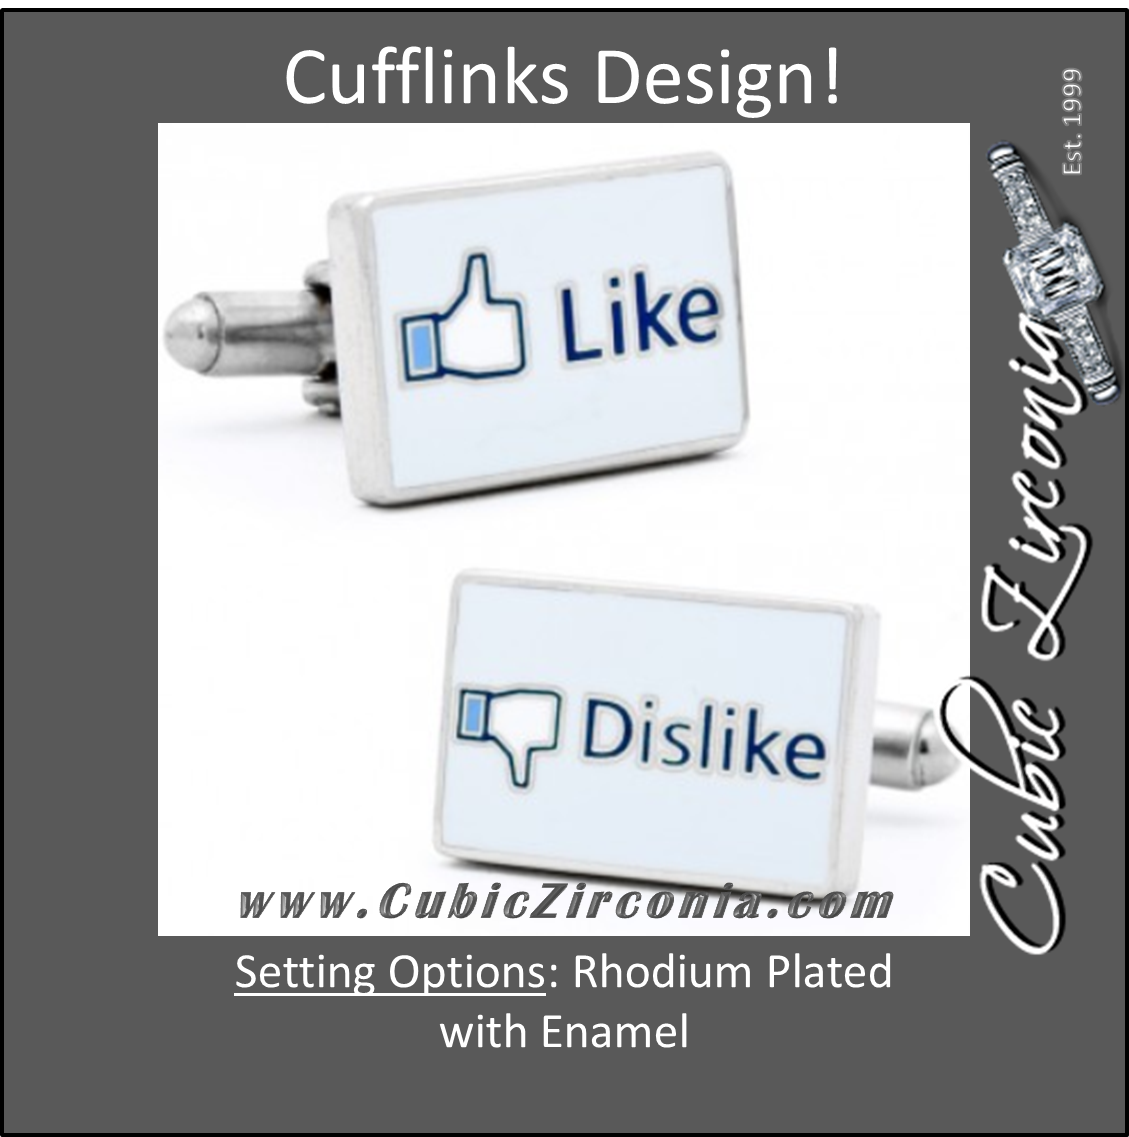 Men’s Cufflinks- Enamel Like/Dislike Social Network Design